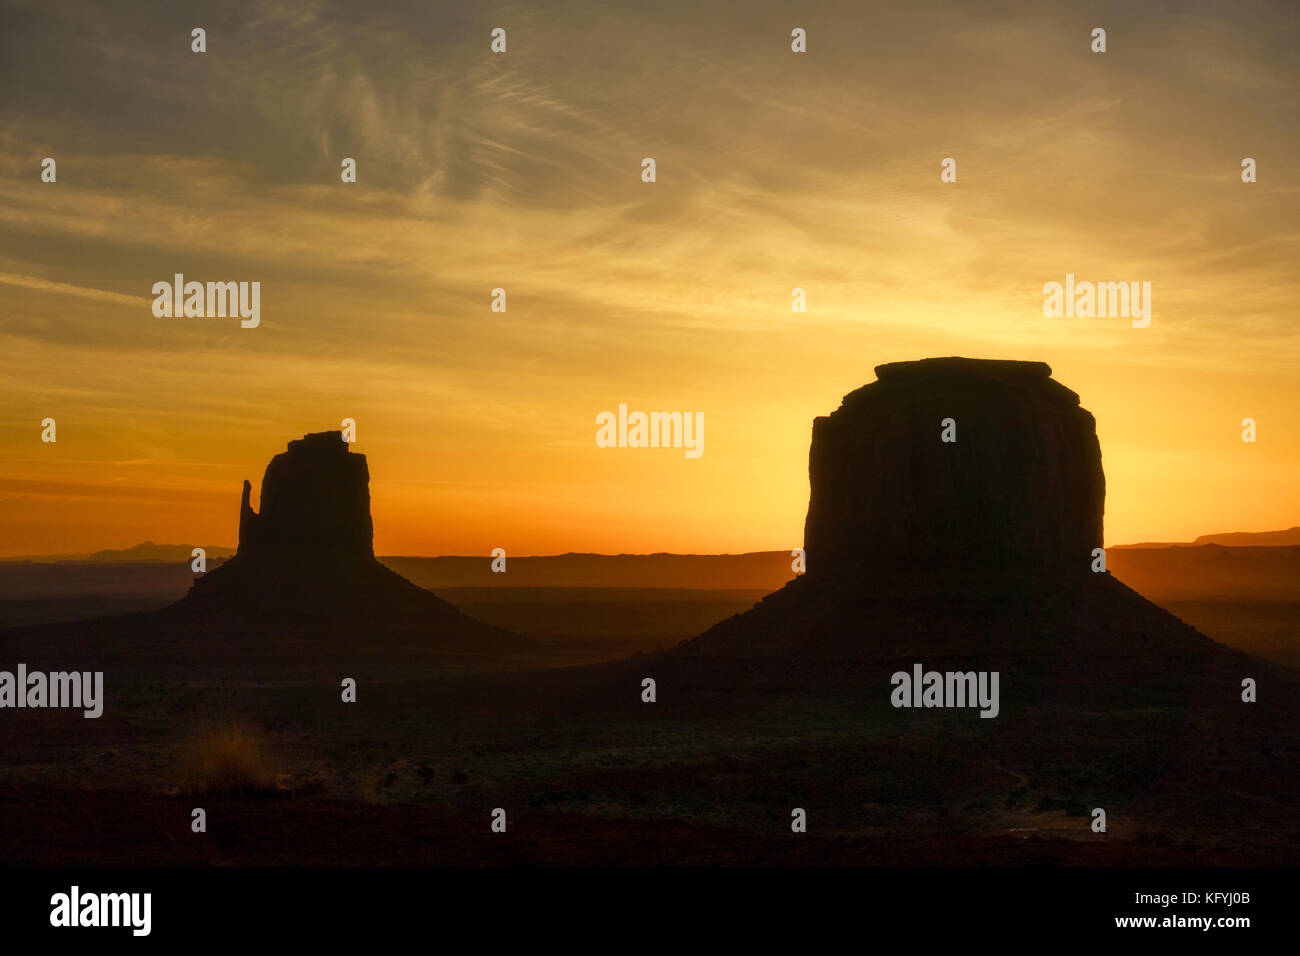 Die fäustlinge, Mesa, Red Rock am Monument Valley, Navajo Tribal Park, Arizona usa Stockfoto